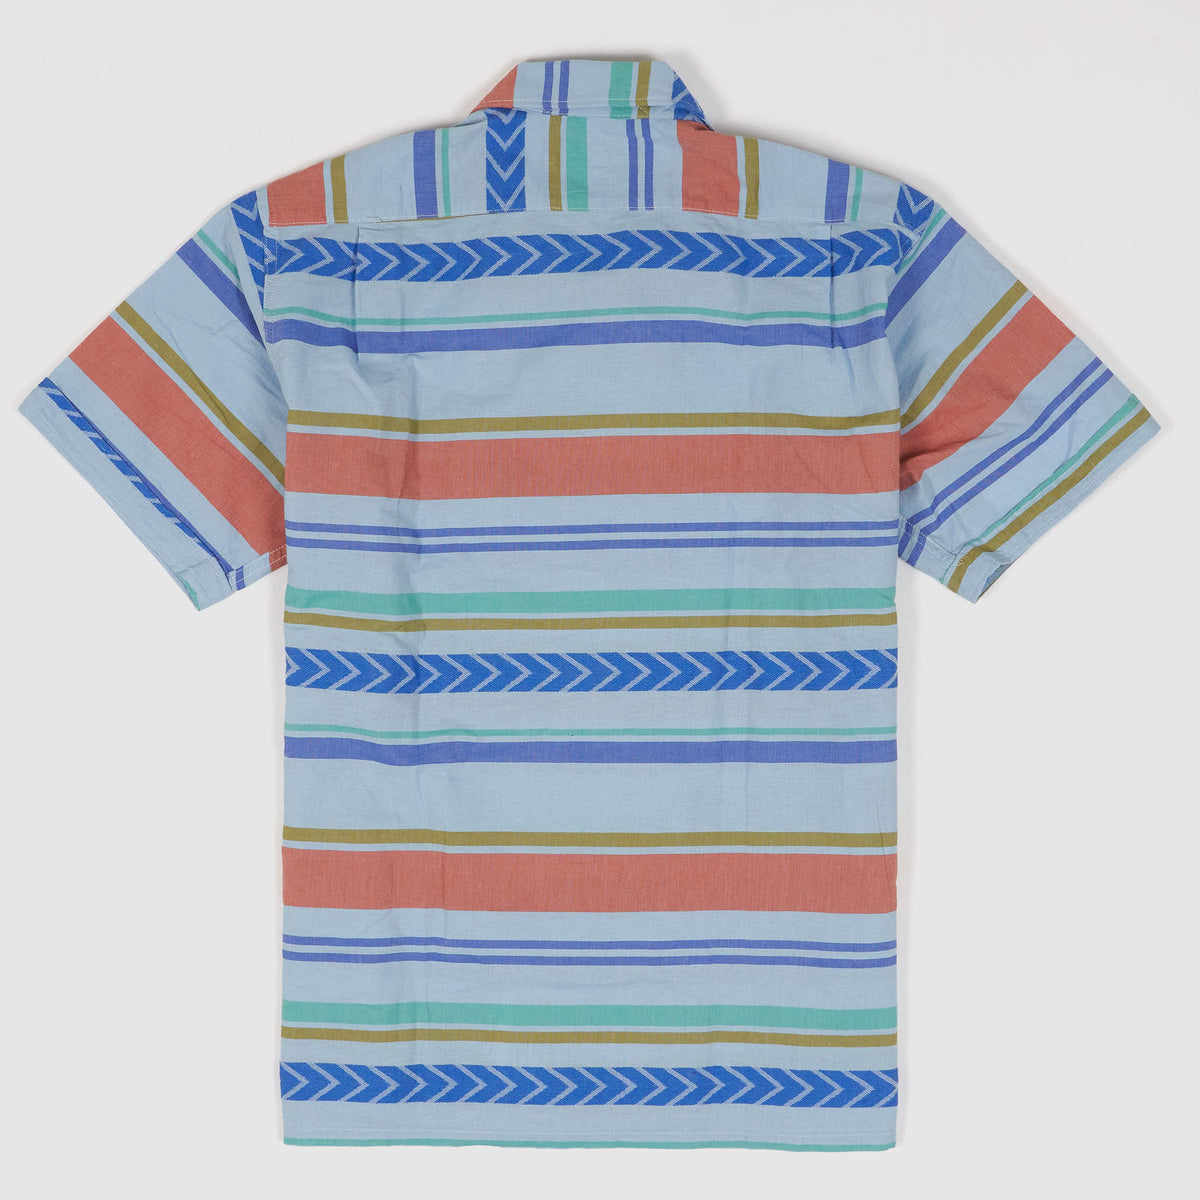 Engineered Garment Woven Striped Southwestern  Camp Shirt